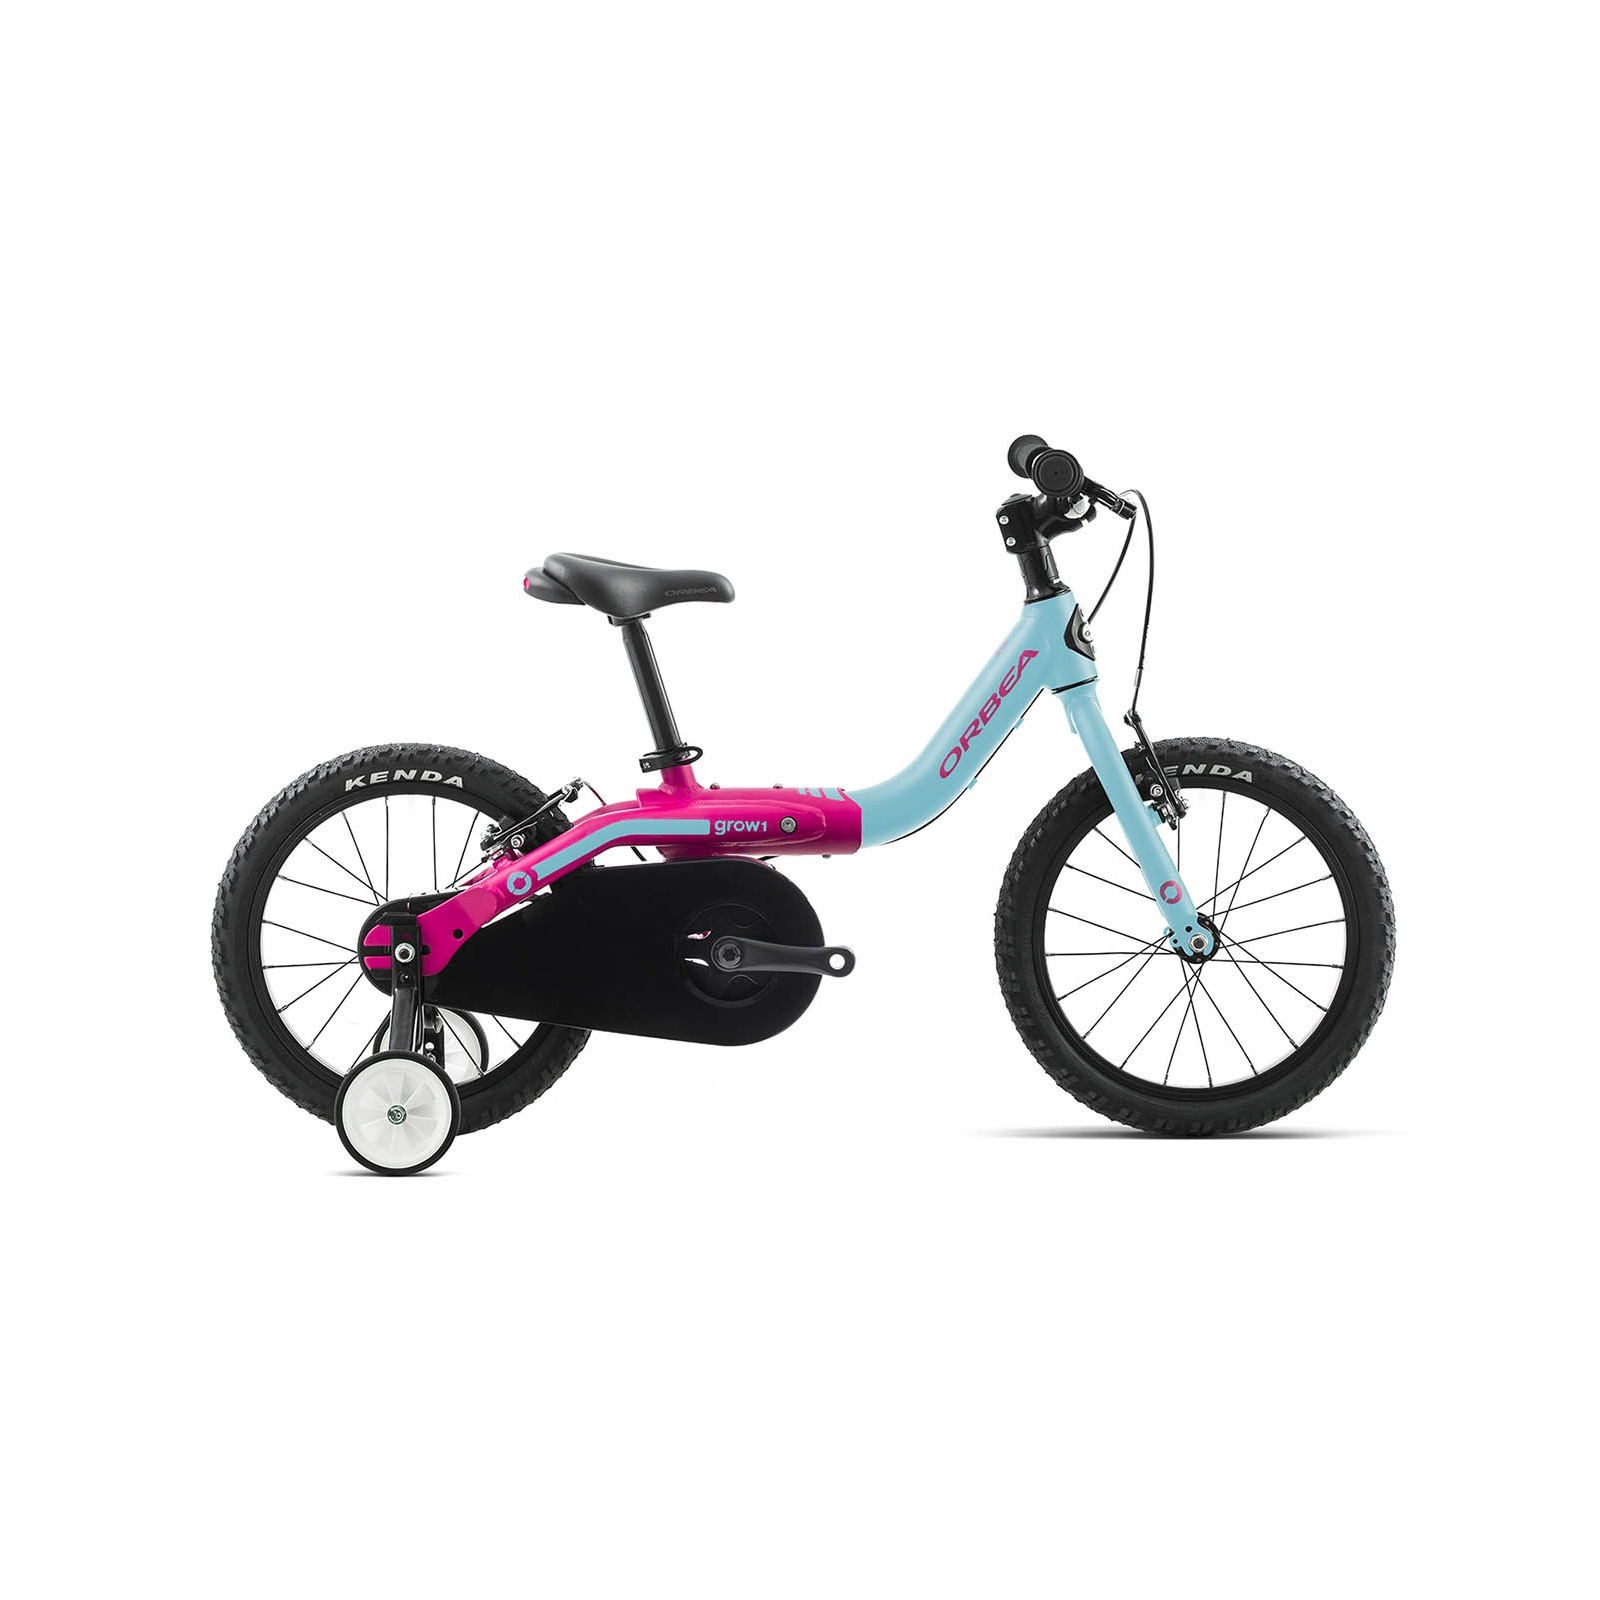 Дитячий велосипед Orbea Grow 1 16" 2019 Blue - Pink (J00216K5)